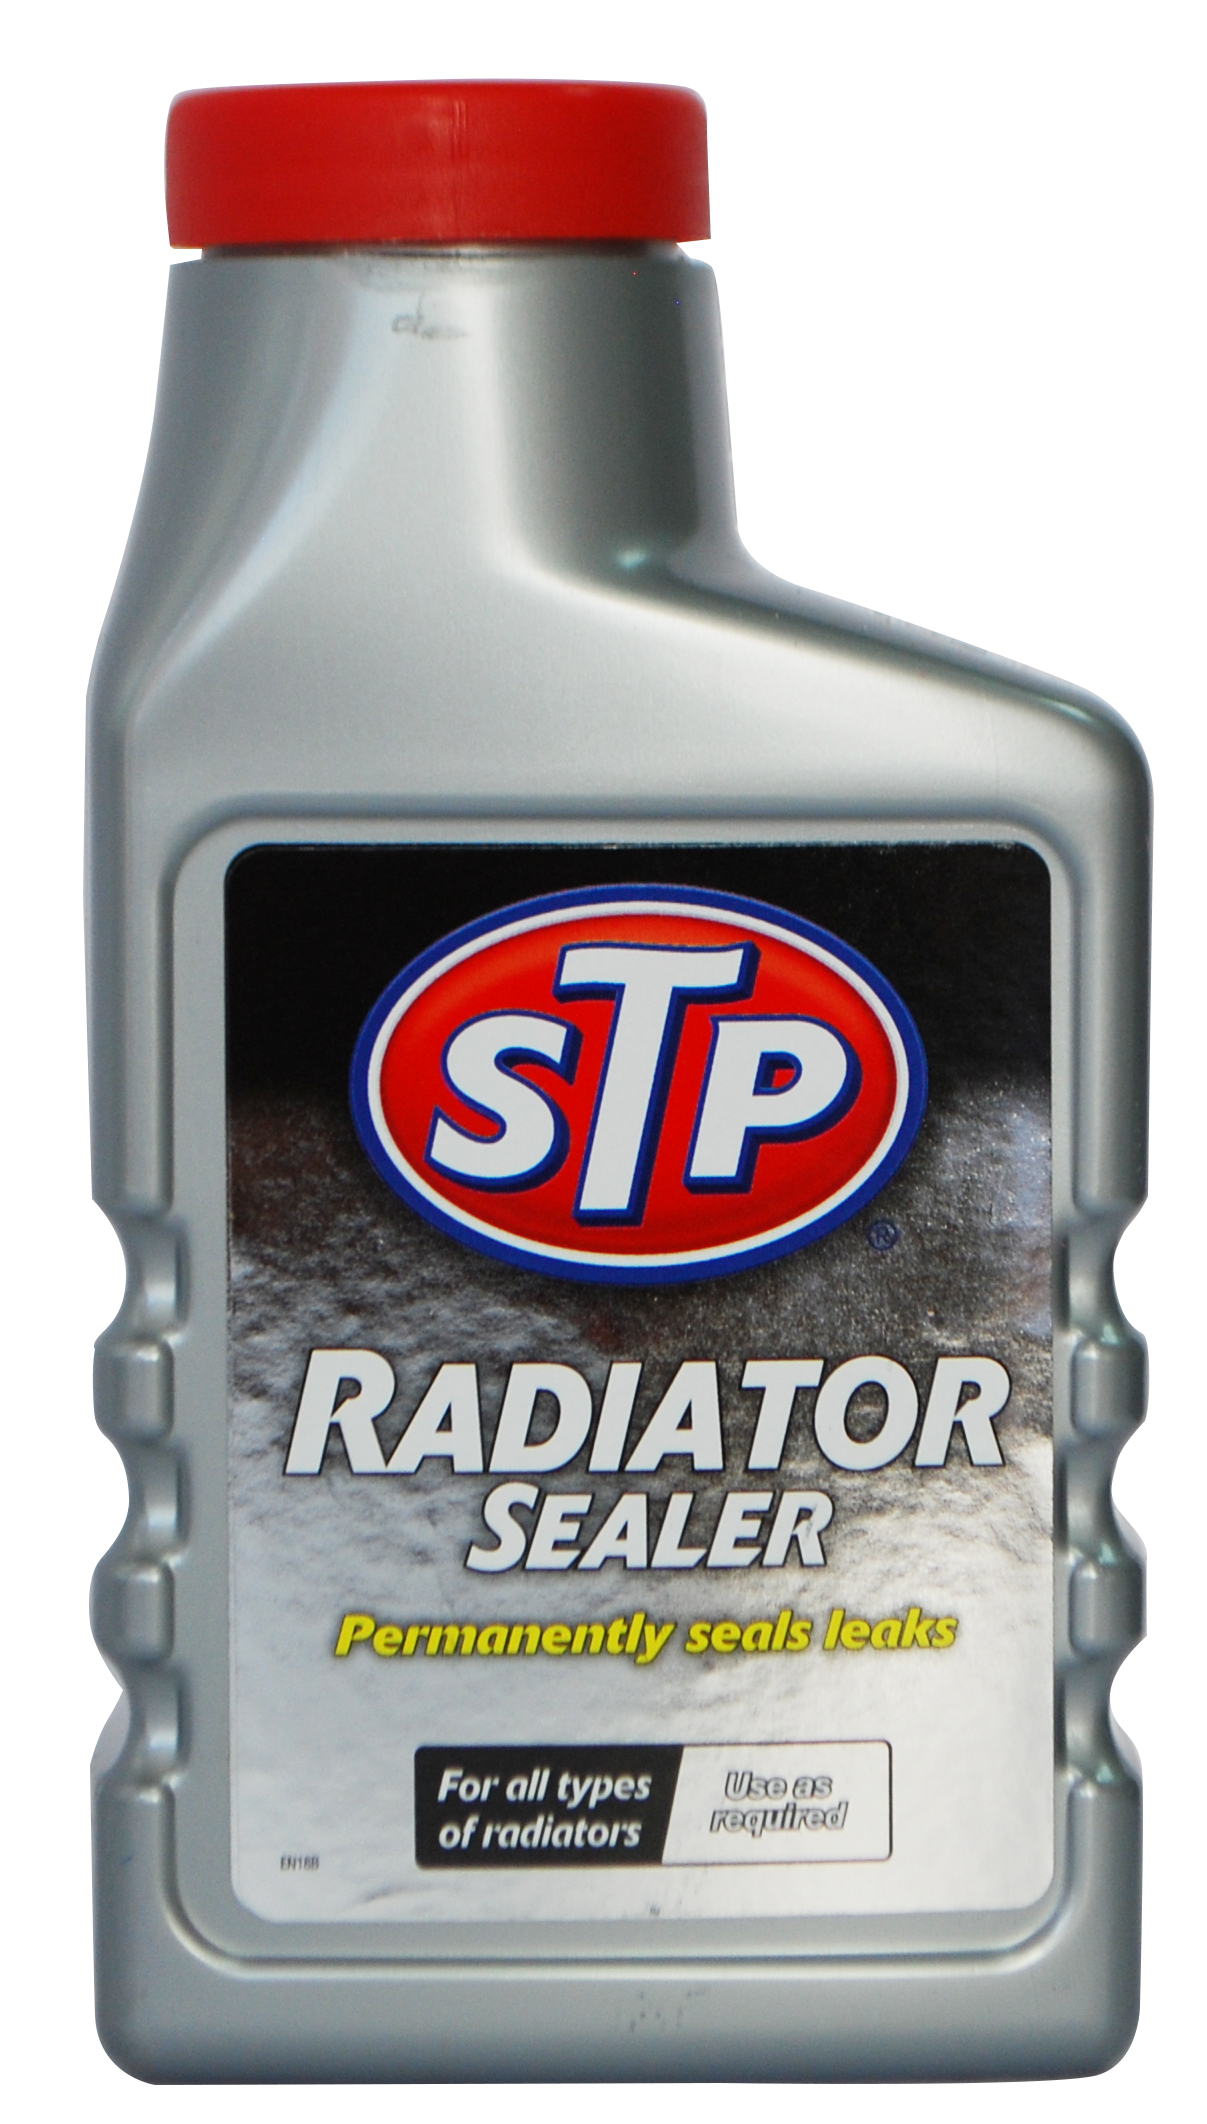 STP RADIATOR SEALER 300ML